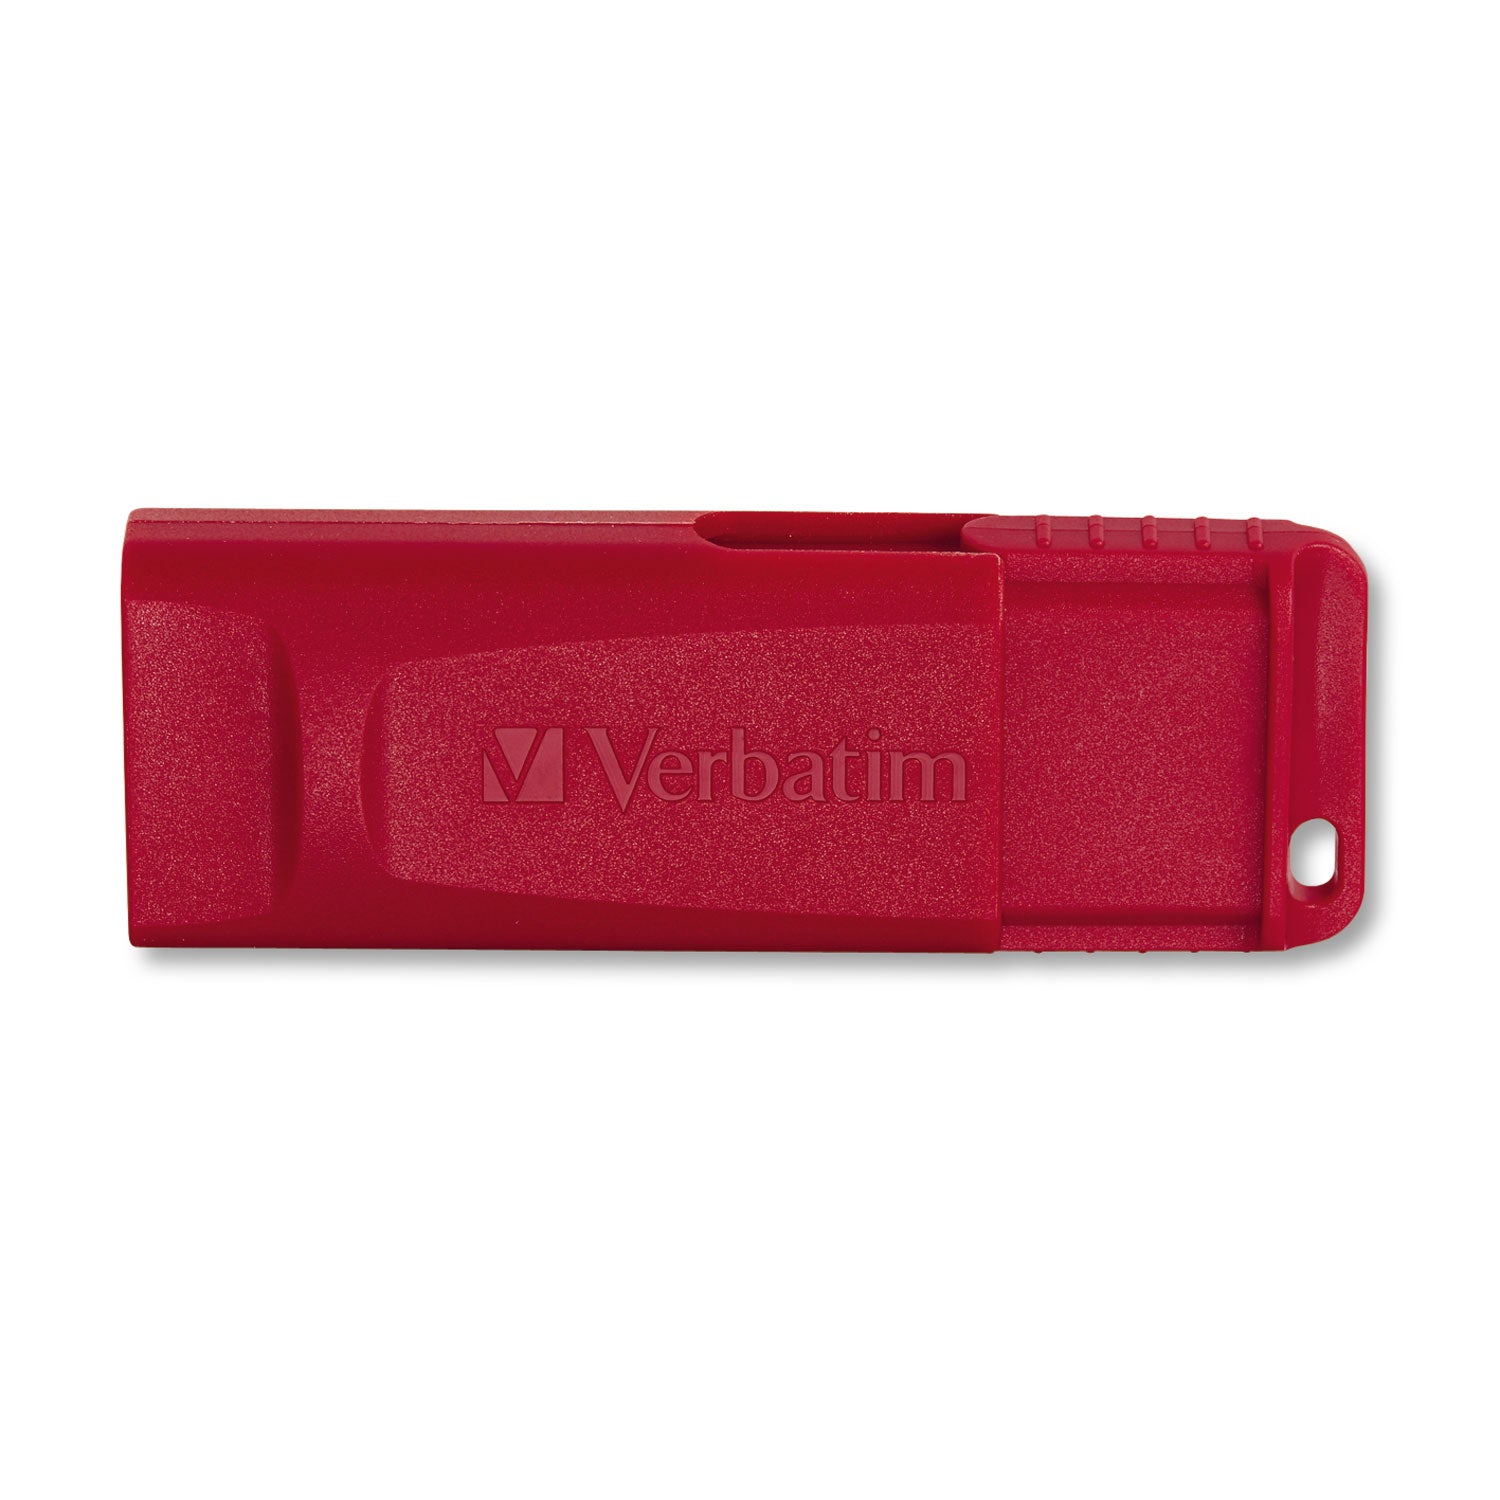 Store 'n' Go USB Flash Drive, 128 GB, Red - 